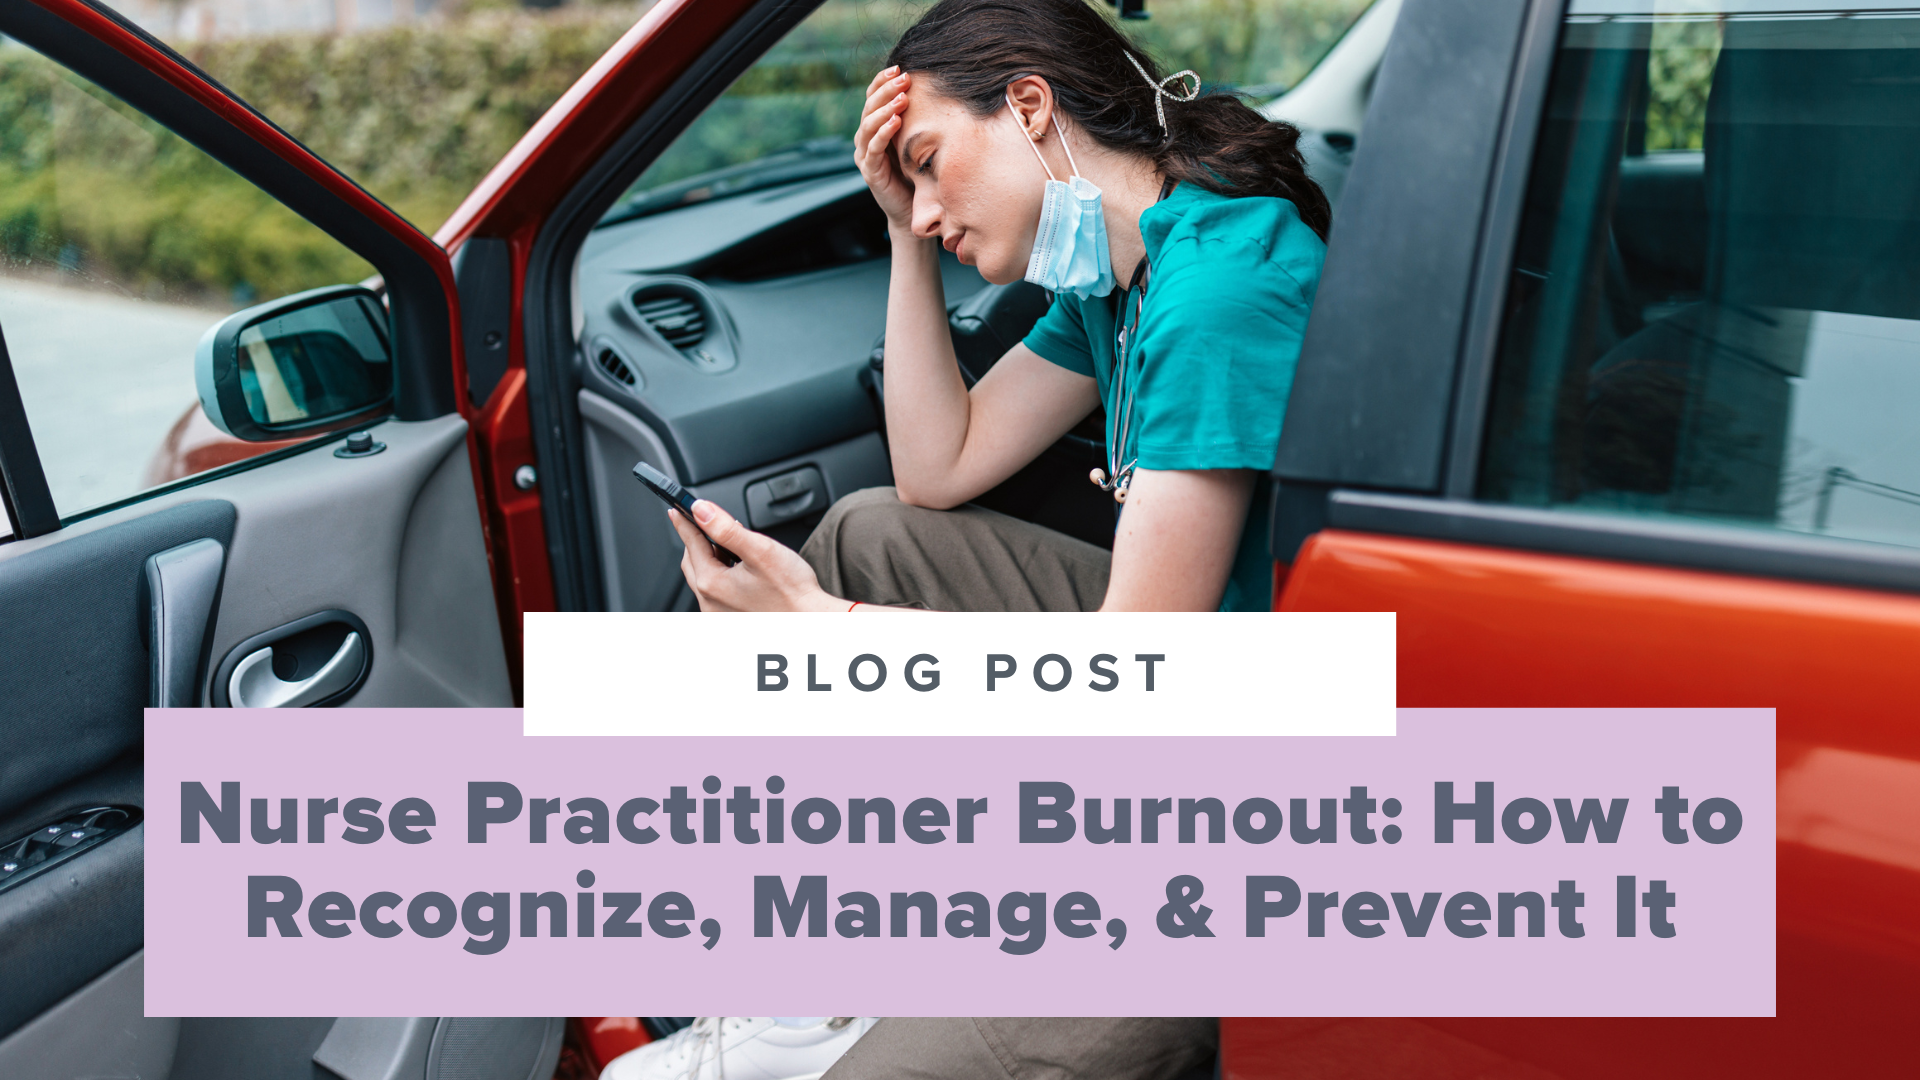 SMNP Blog - Nurse Practitioner Burnout: How to Recognize, Manage, & Prevent It